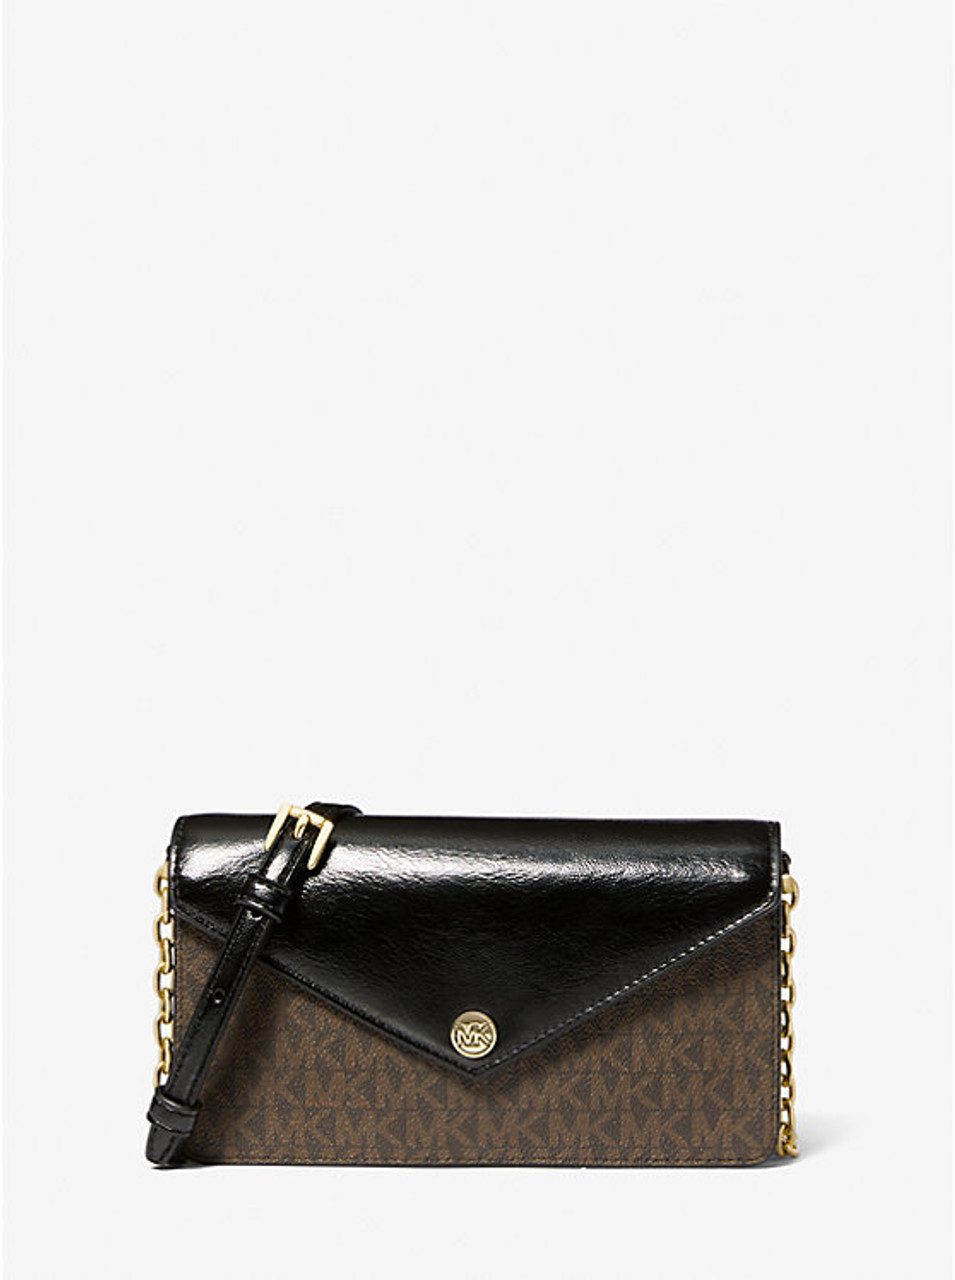 Michael Kors Black Leather Small Purse - Women's handbags